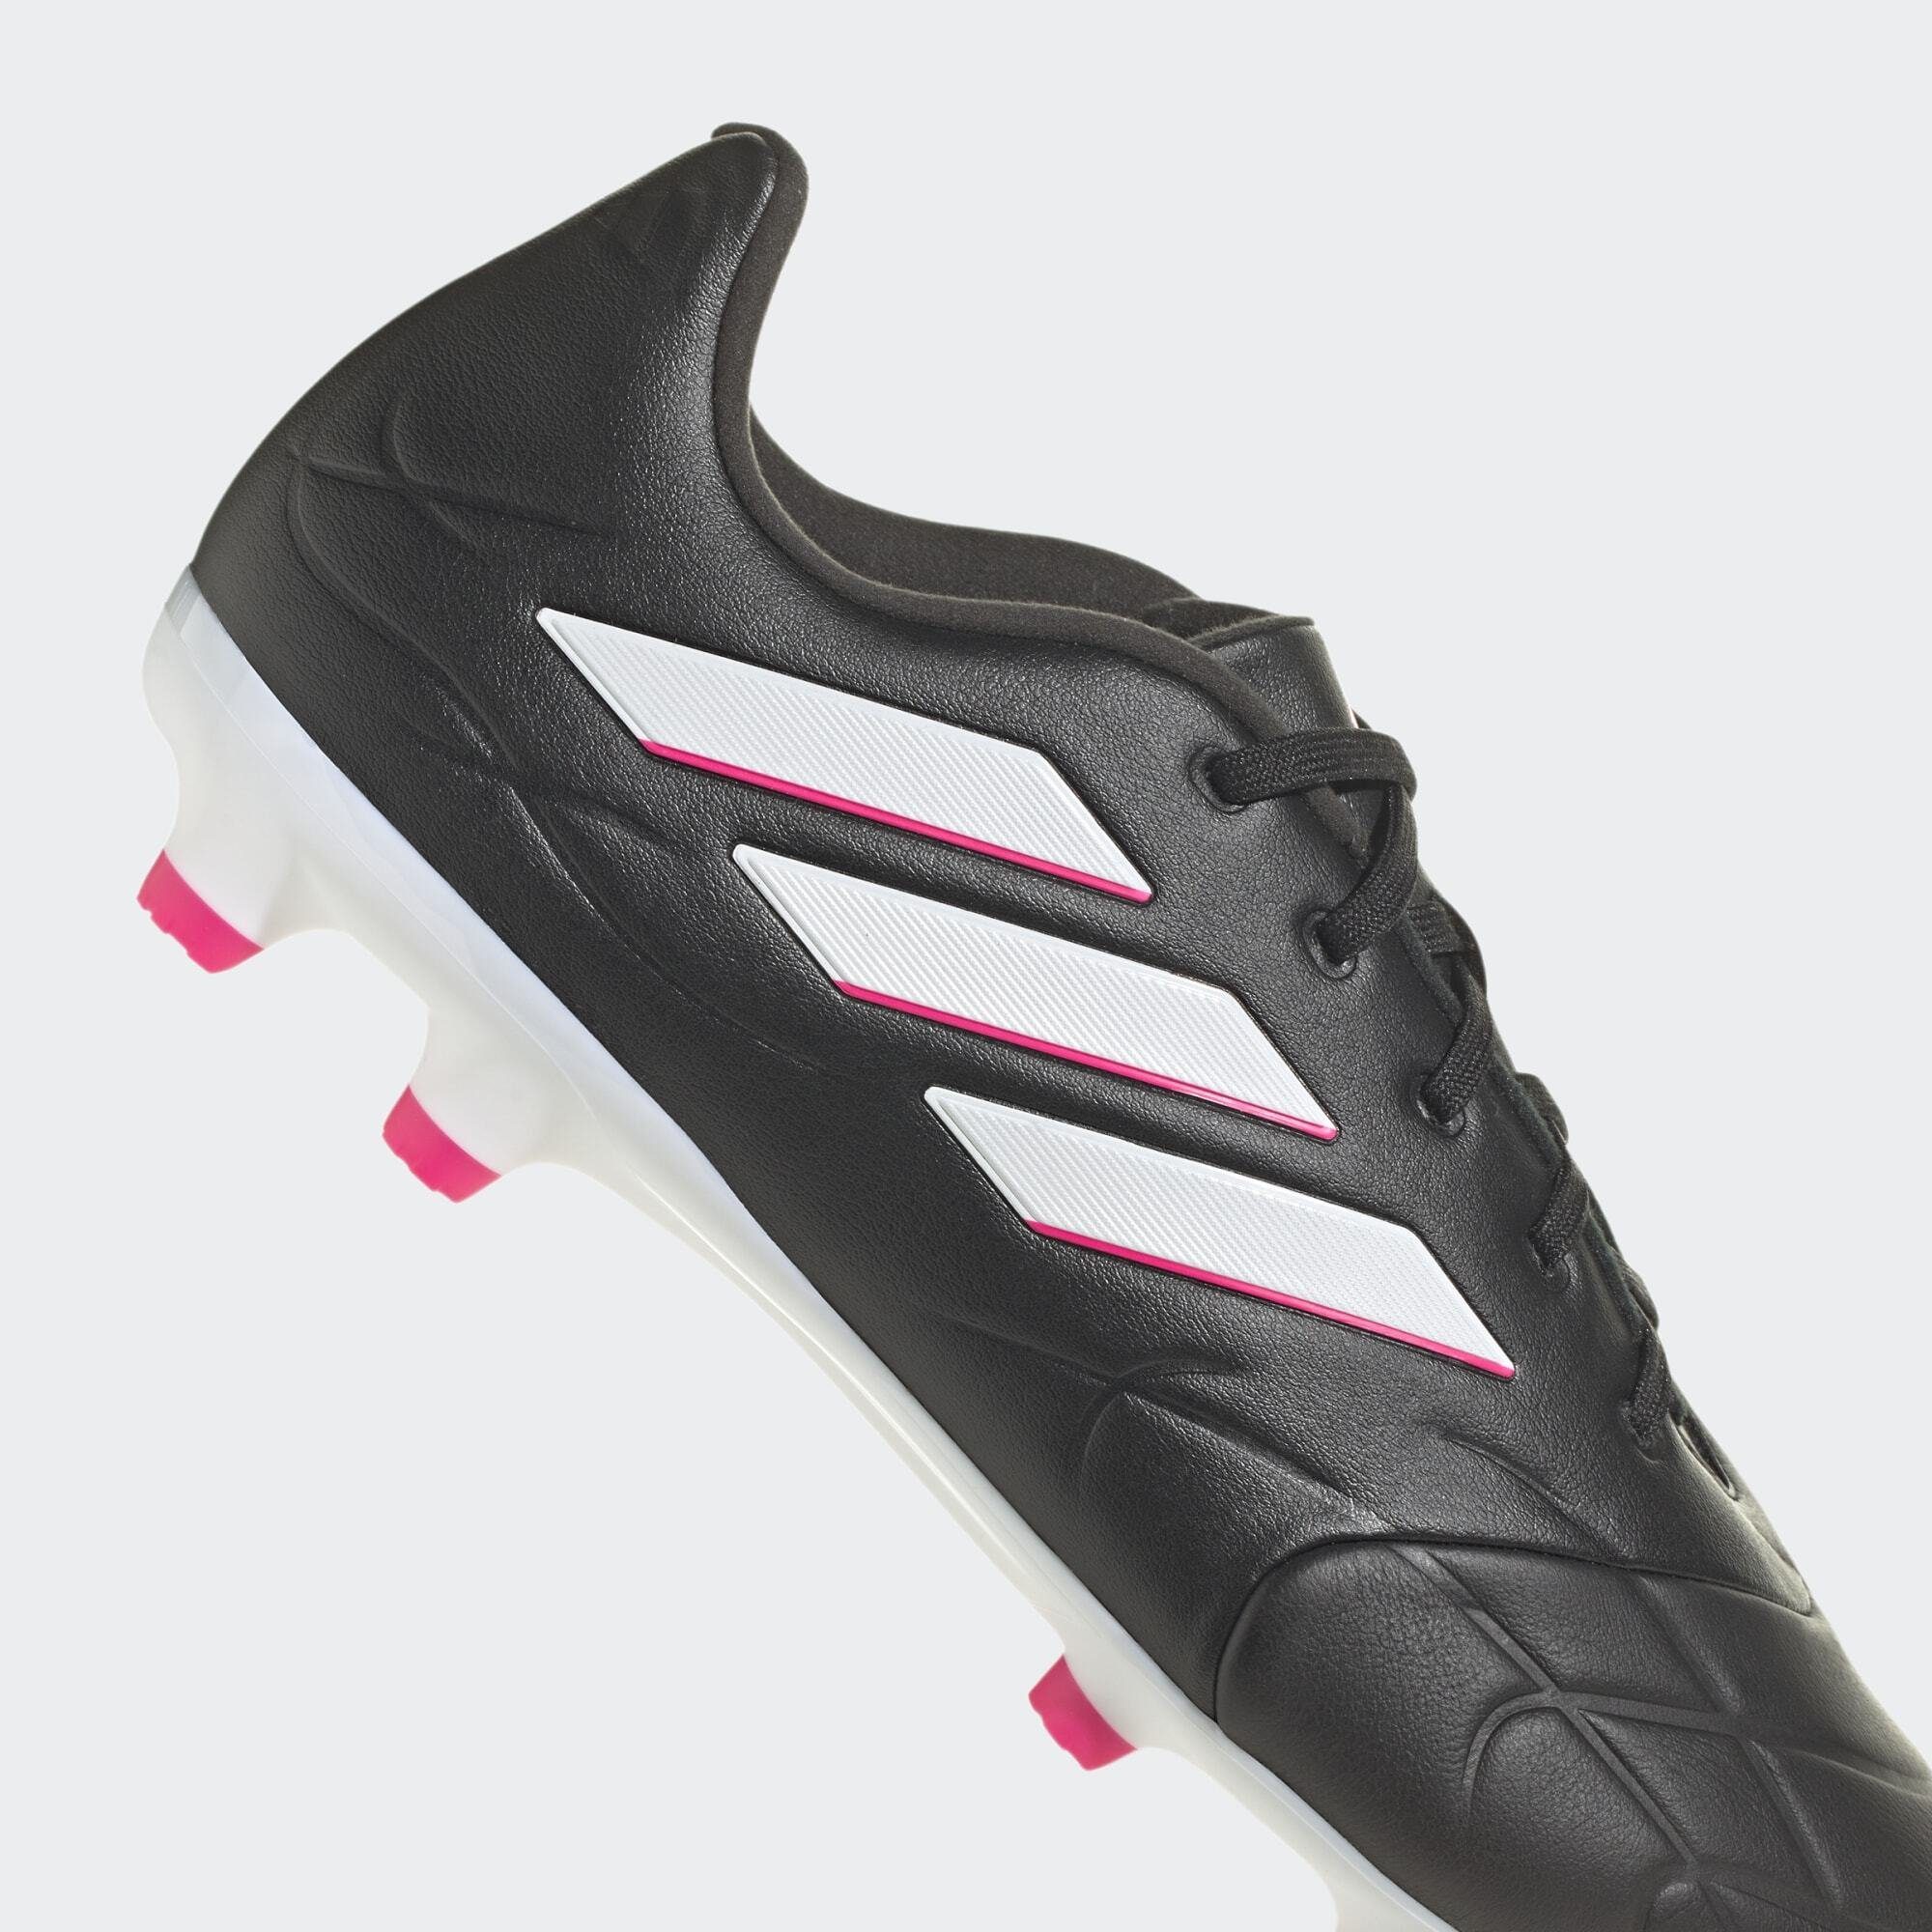 Fußballschuh / Core Pink Metalic FG 2 Black Zero Shock adidas Performance COPA / Team PURE.3 FUSSBALLSCHUH